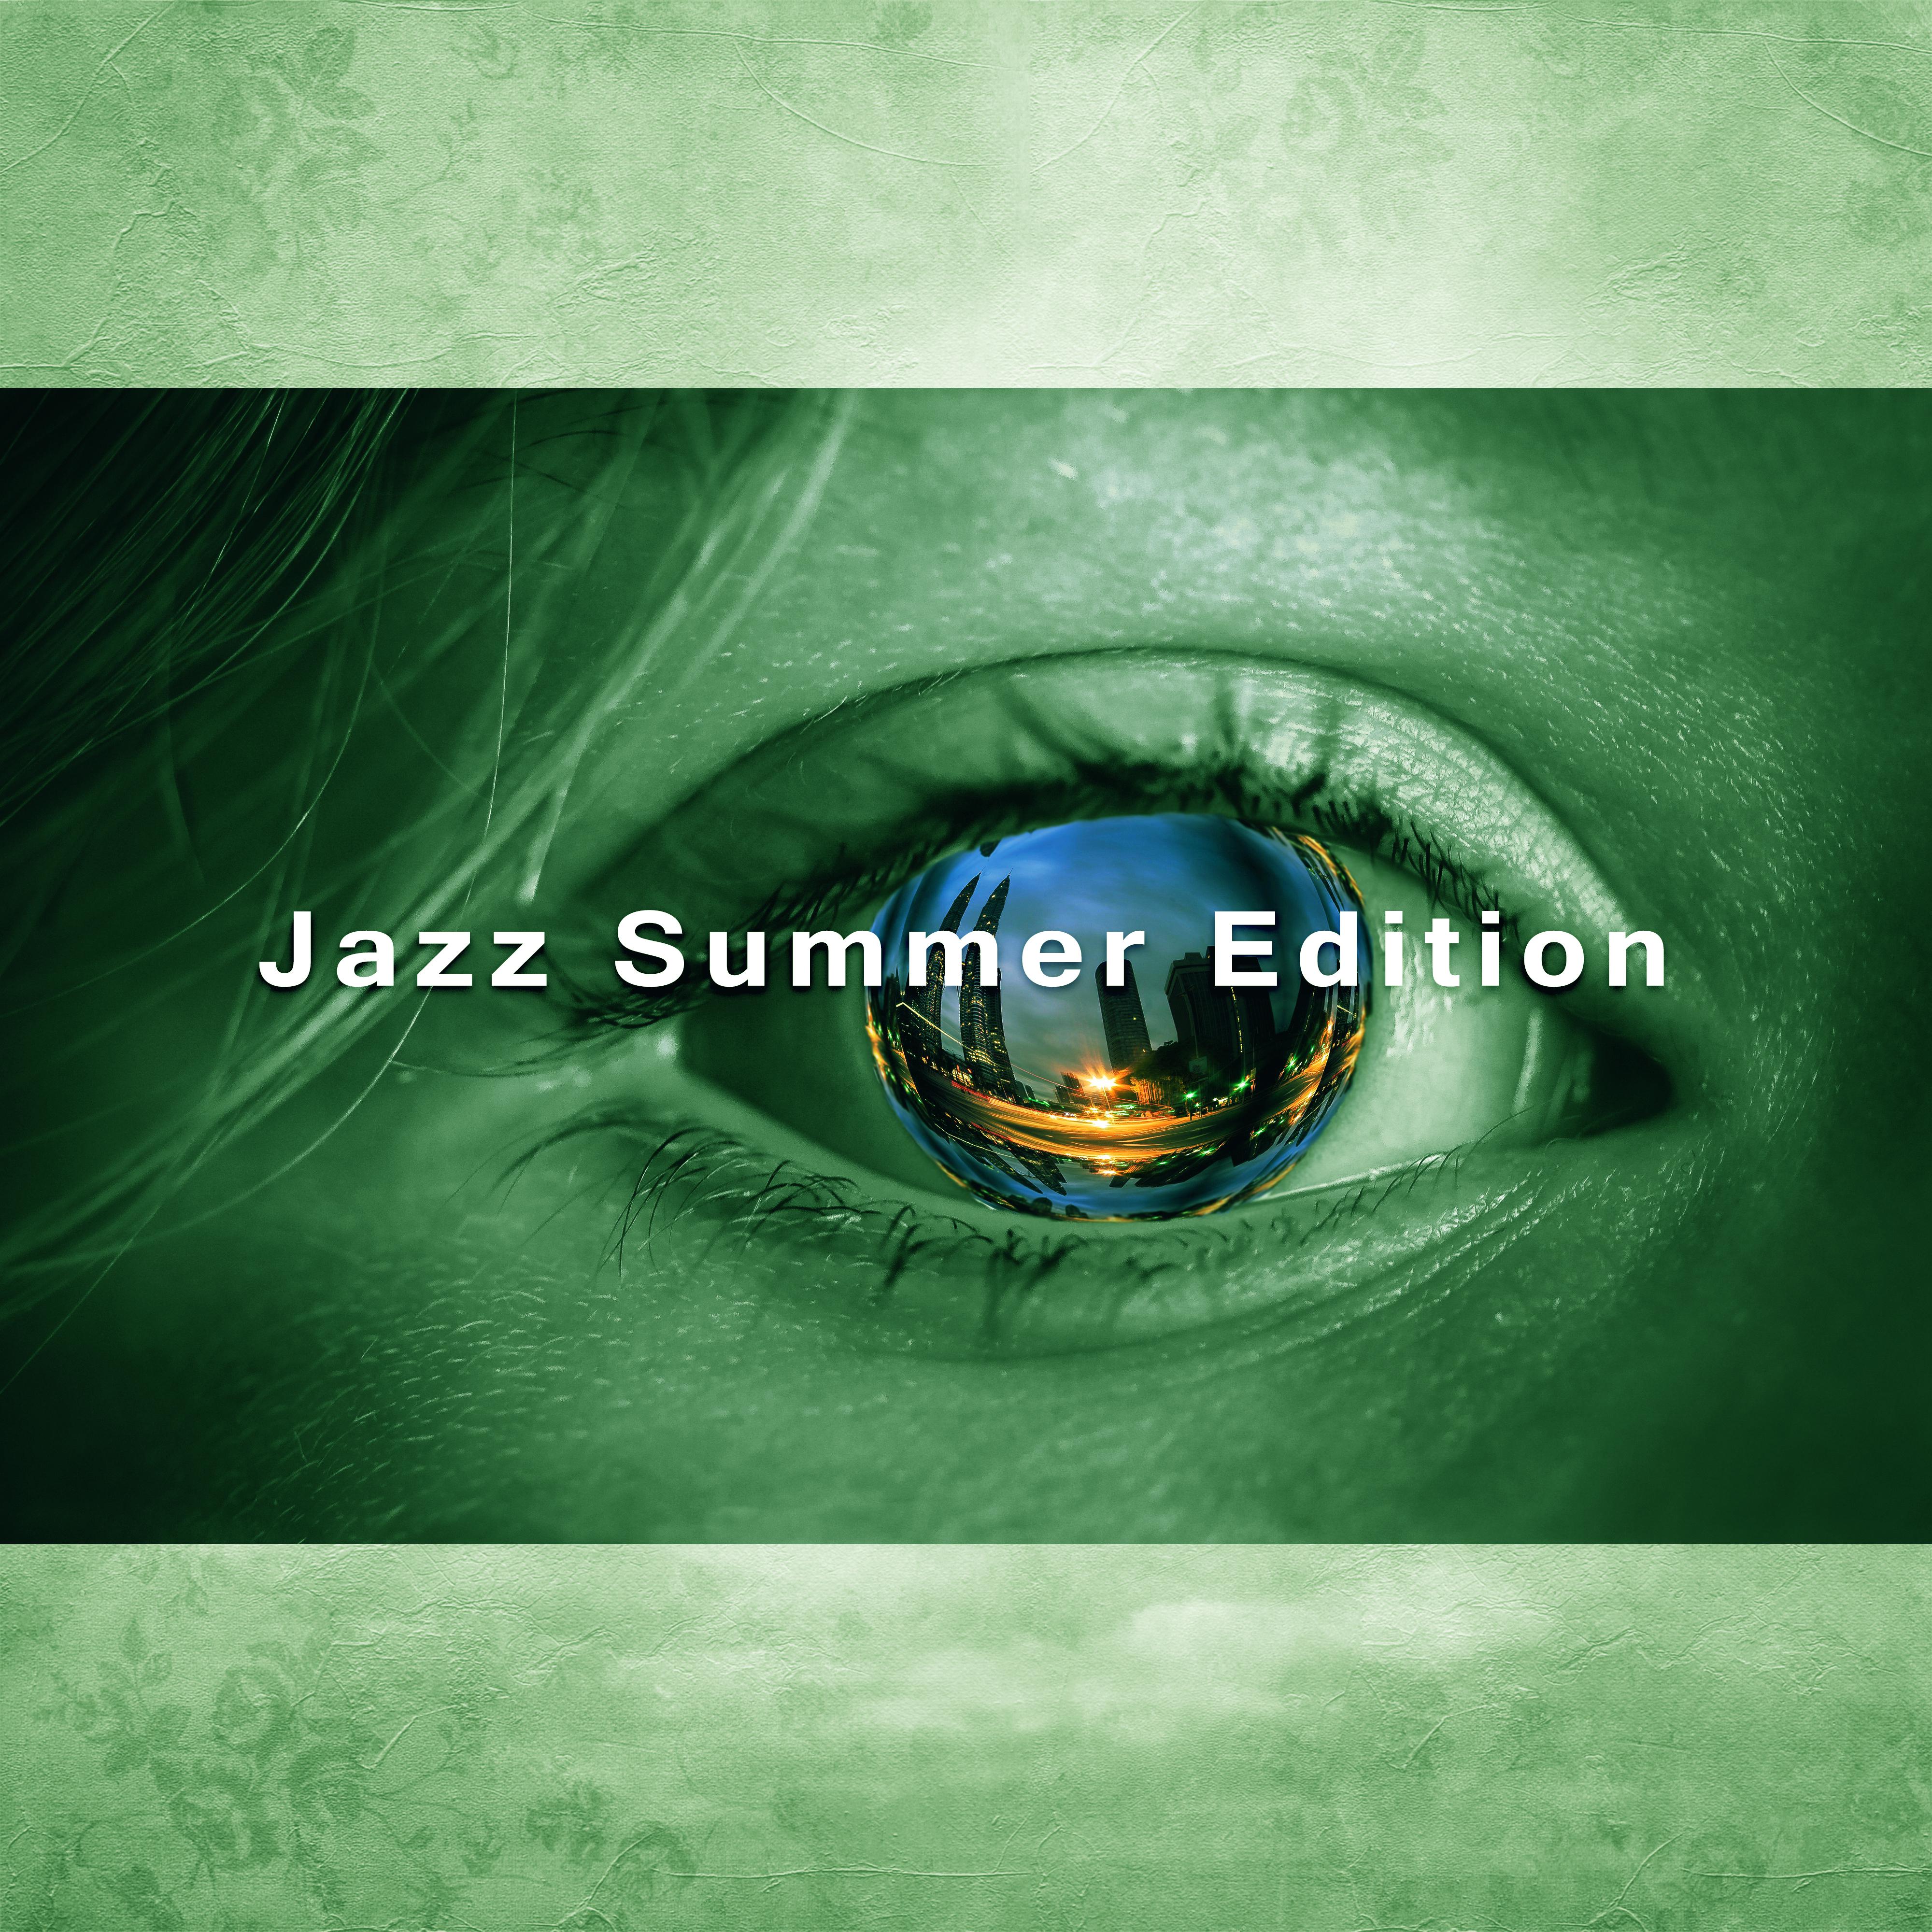 Jazz Summer Edition  Cafe Music 2017, Jazz Instrumental, Smooth Jazz, Easy Listening Piano Music